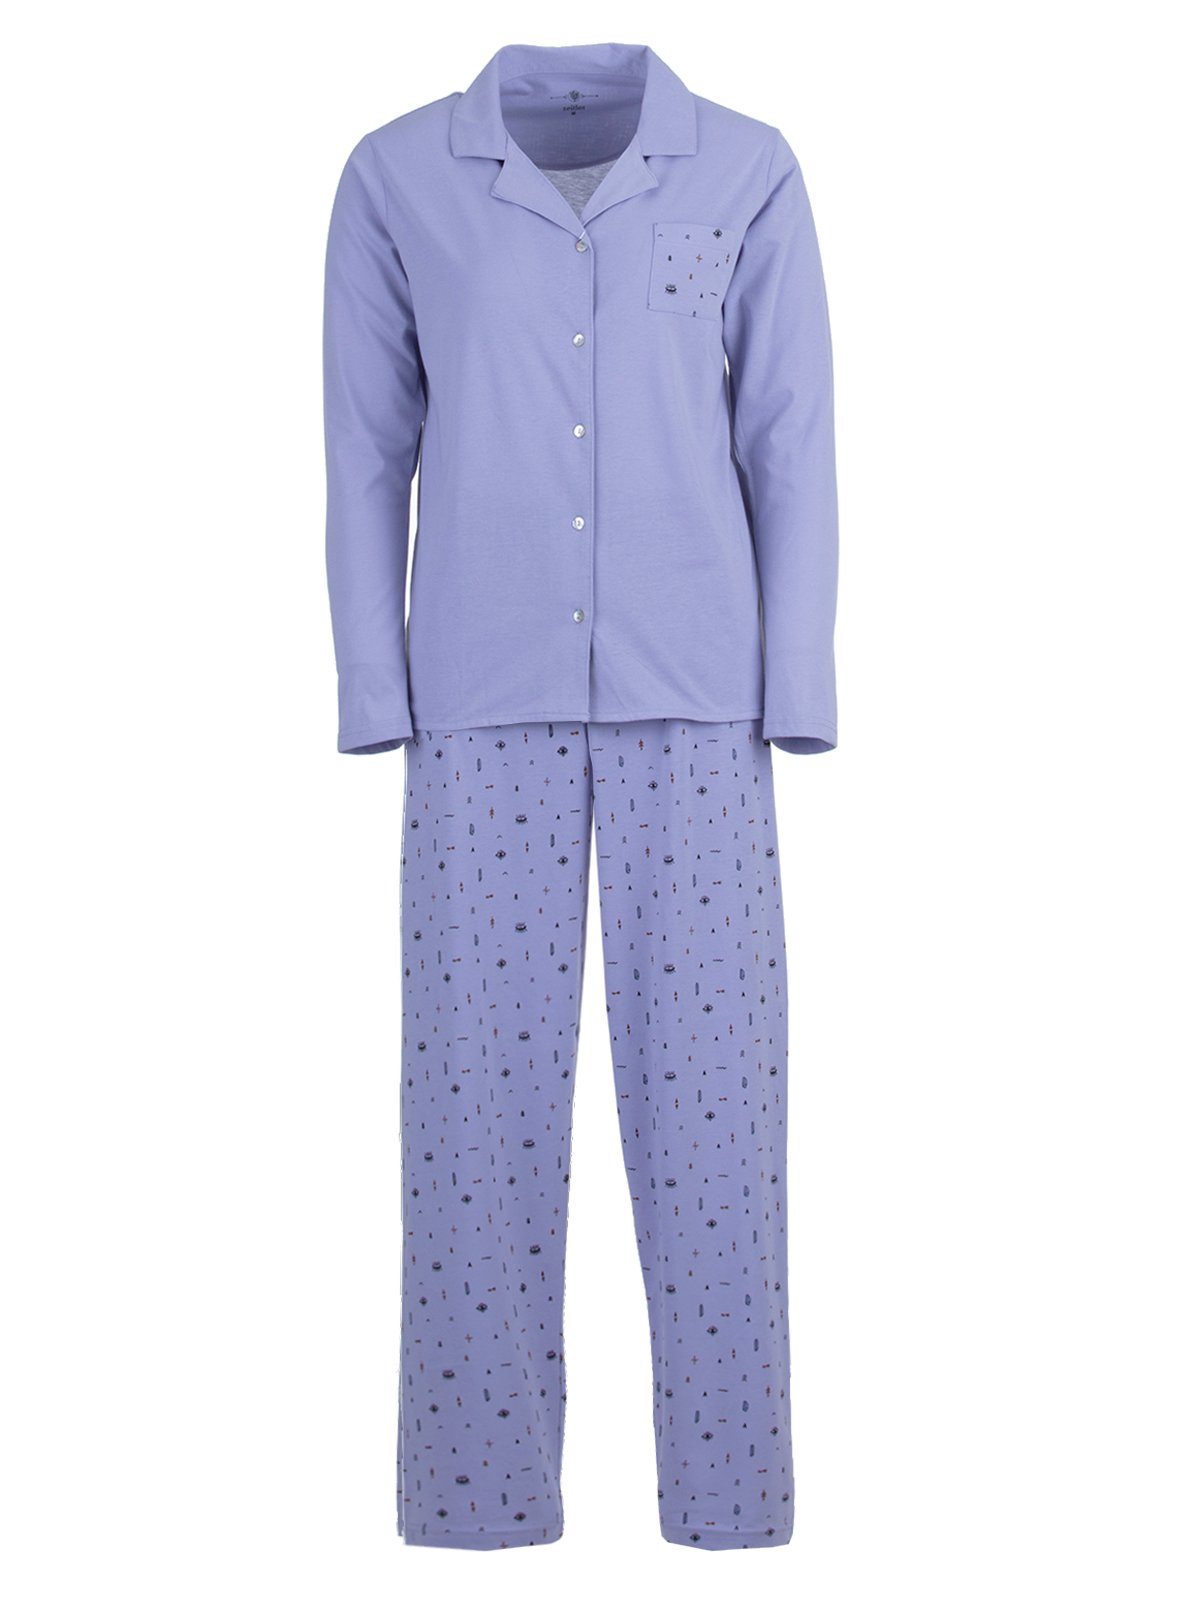 zeitlos Schlafanzug Pyjama Set Langarm - Auge flieder